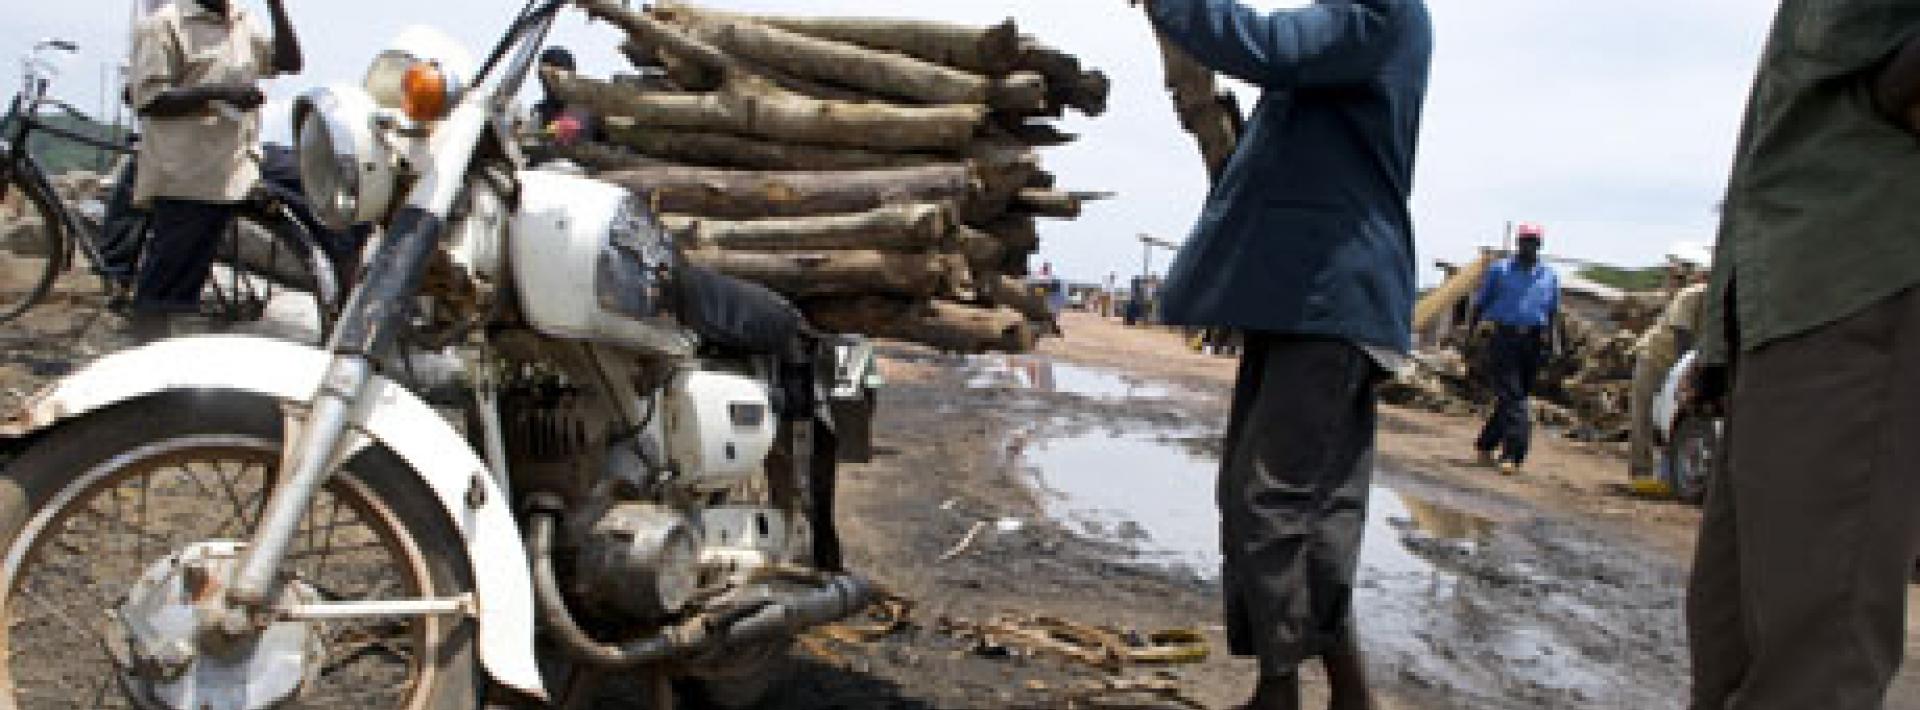 Uganda’s search for eco-friendly fuel